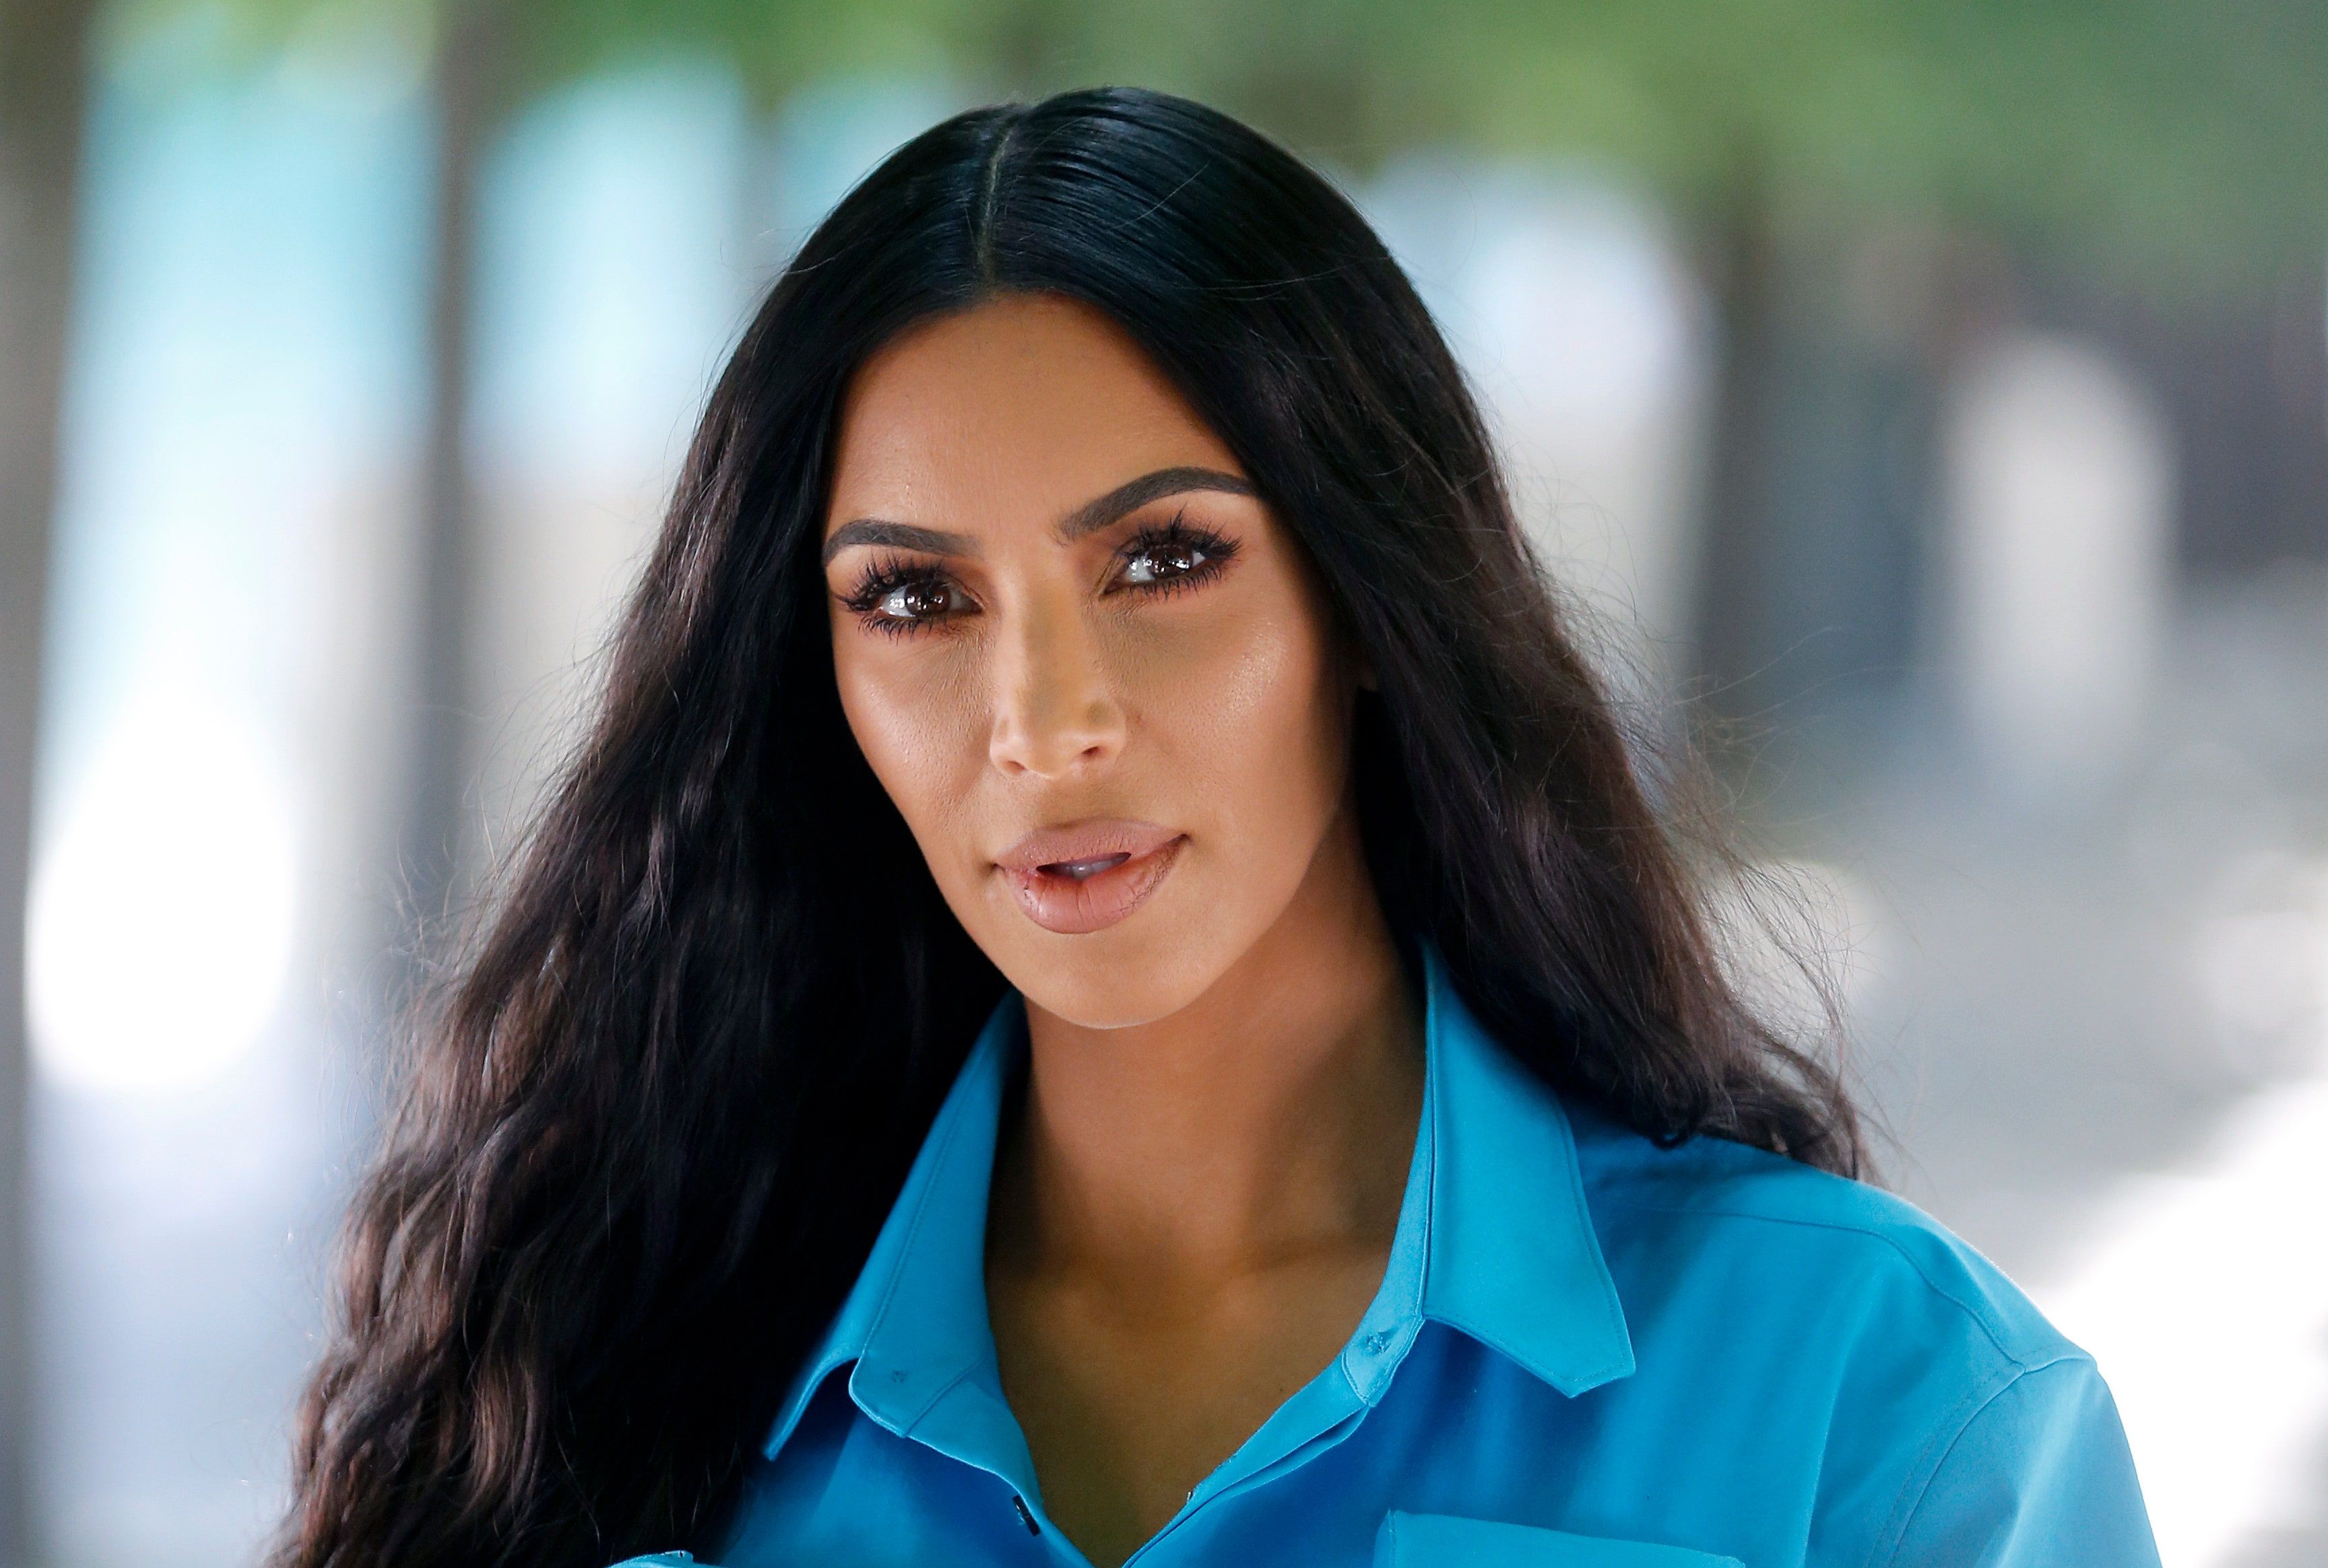 Kim Kardashian Broke Social Distancing to See Kylie Jenner. Teen